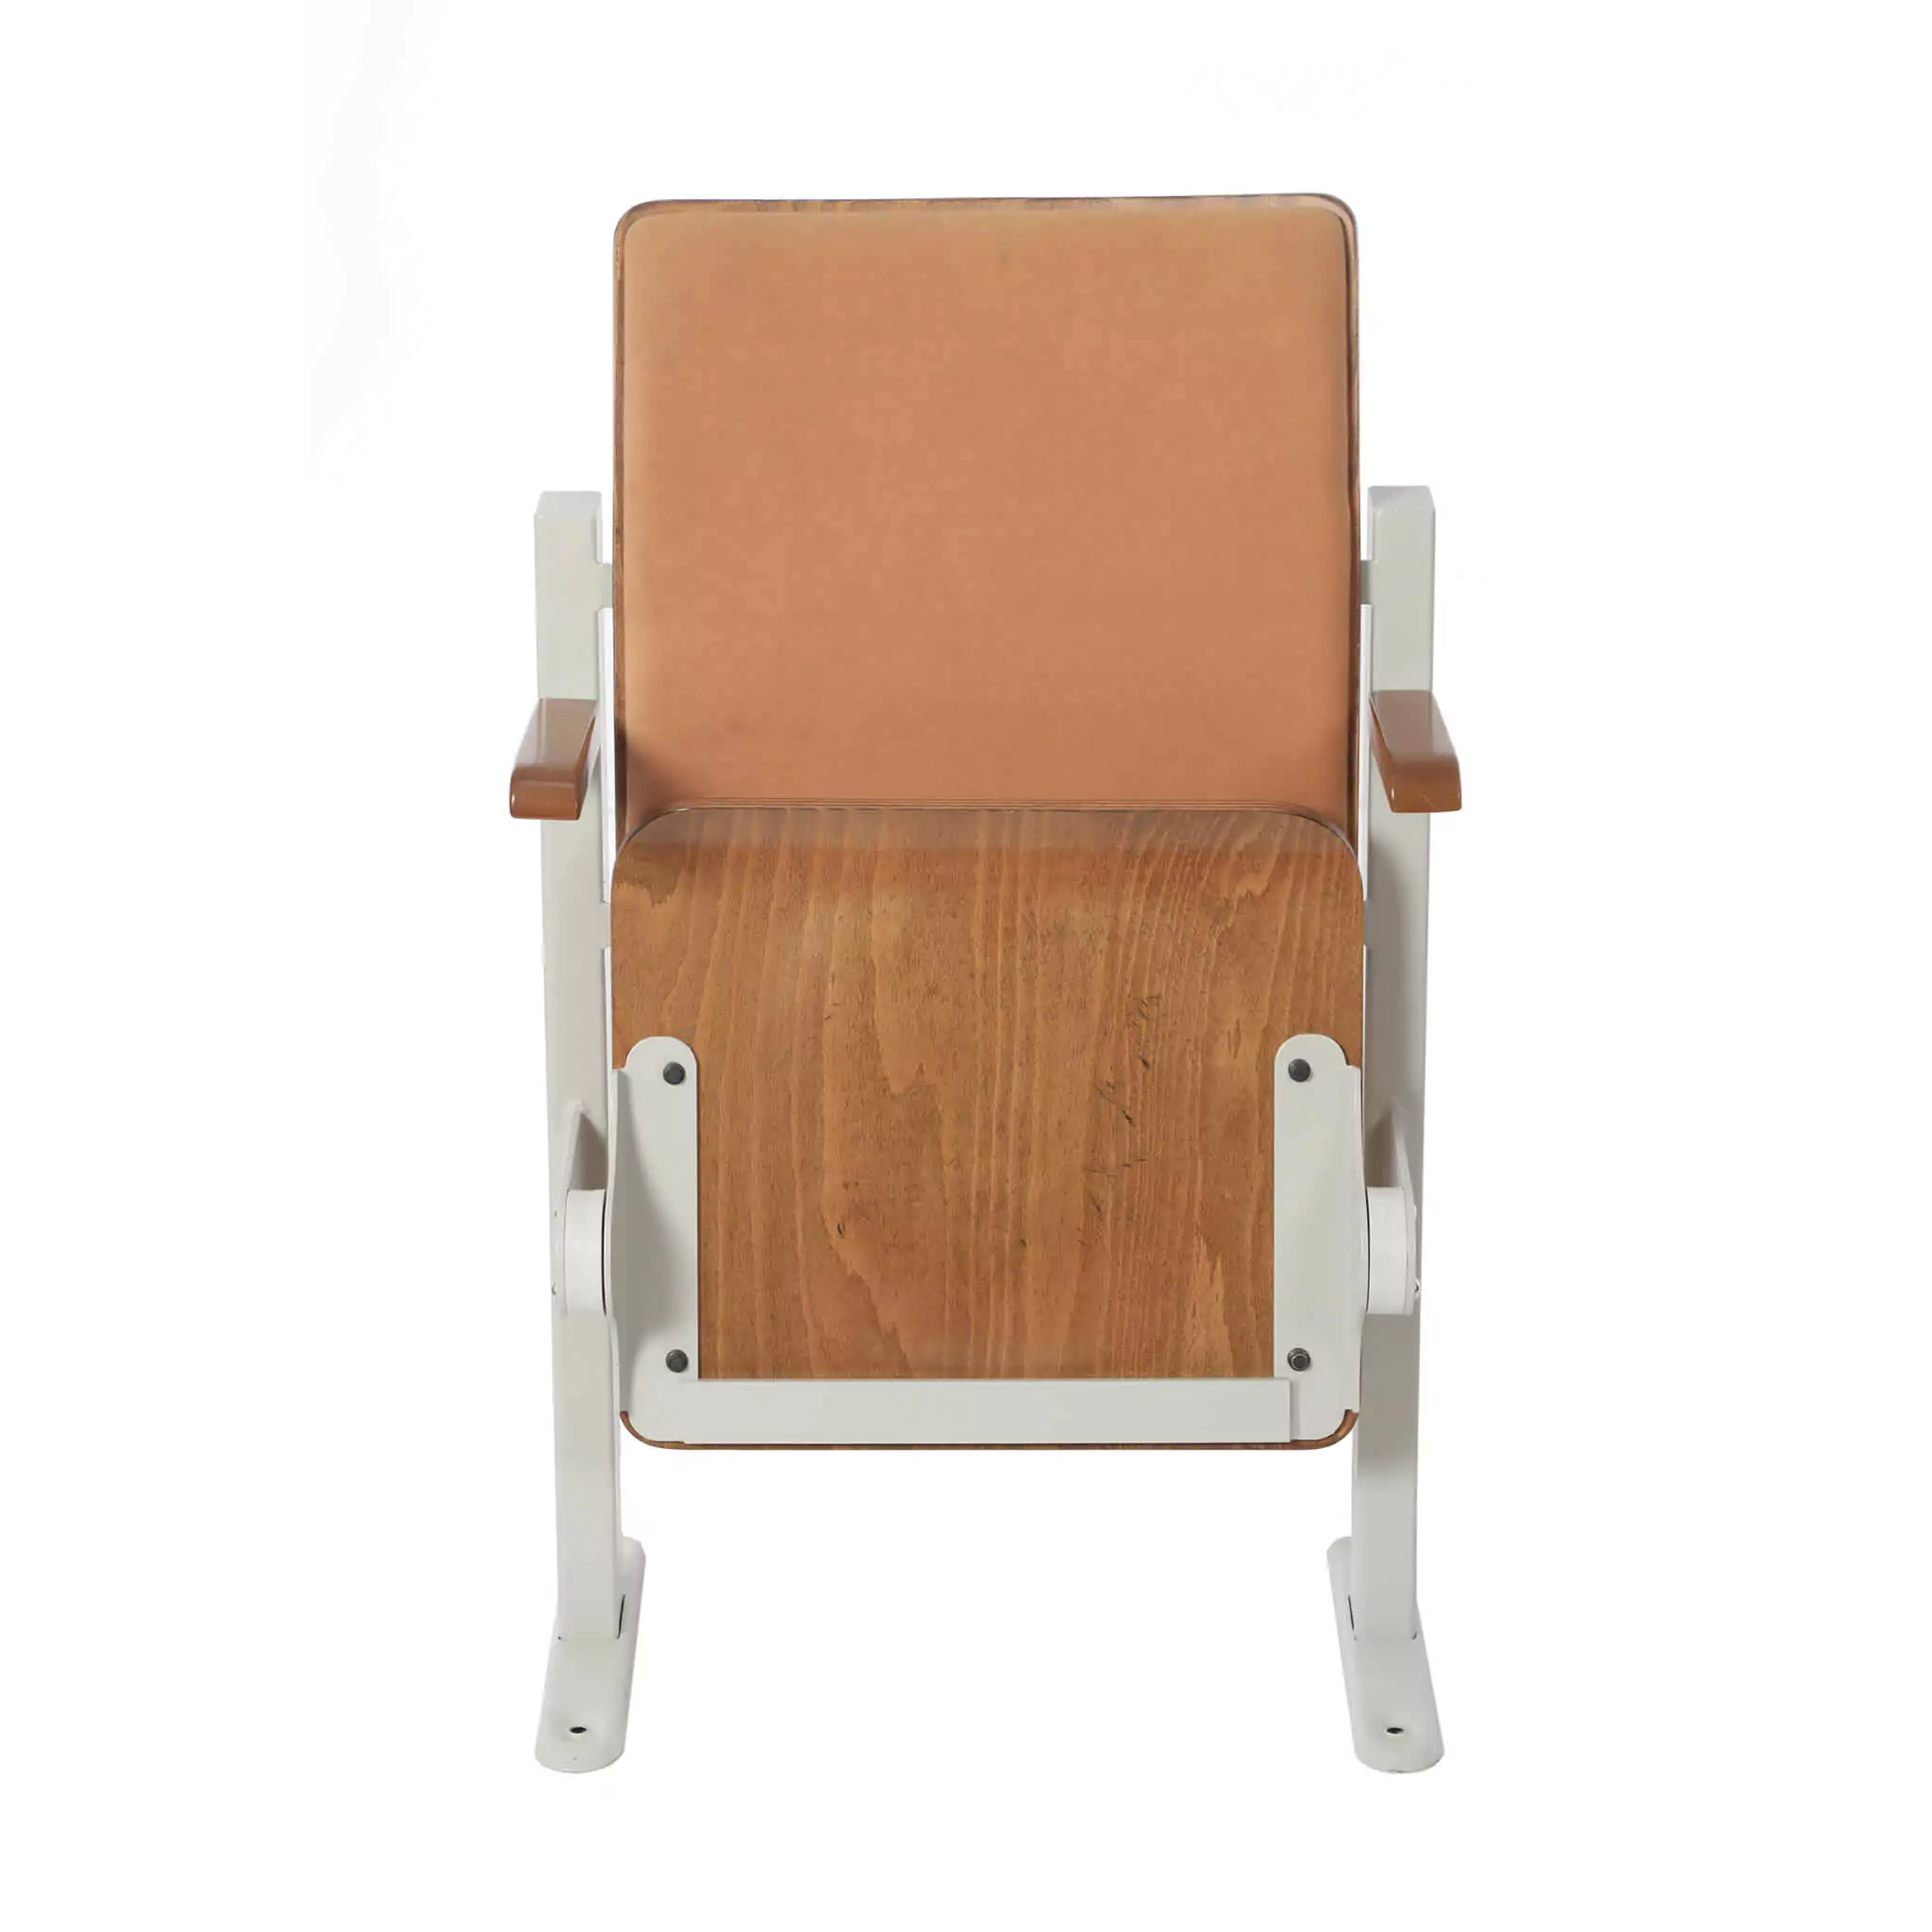 Simko Seating Product School Chair Morganite